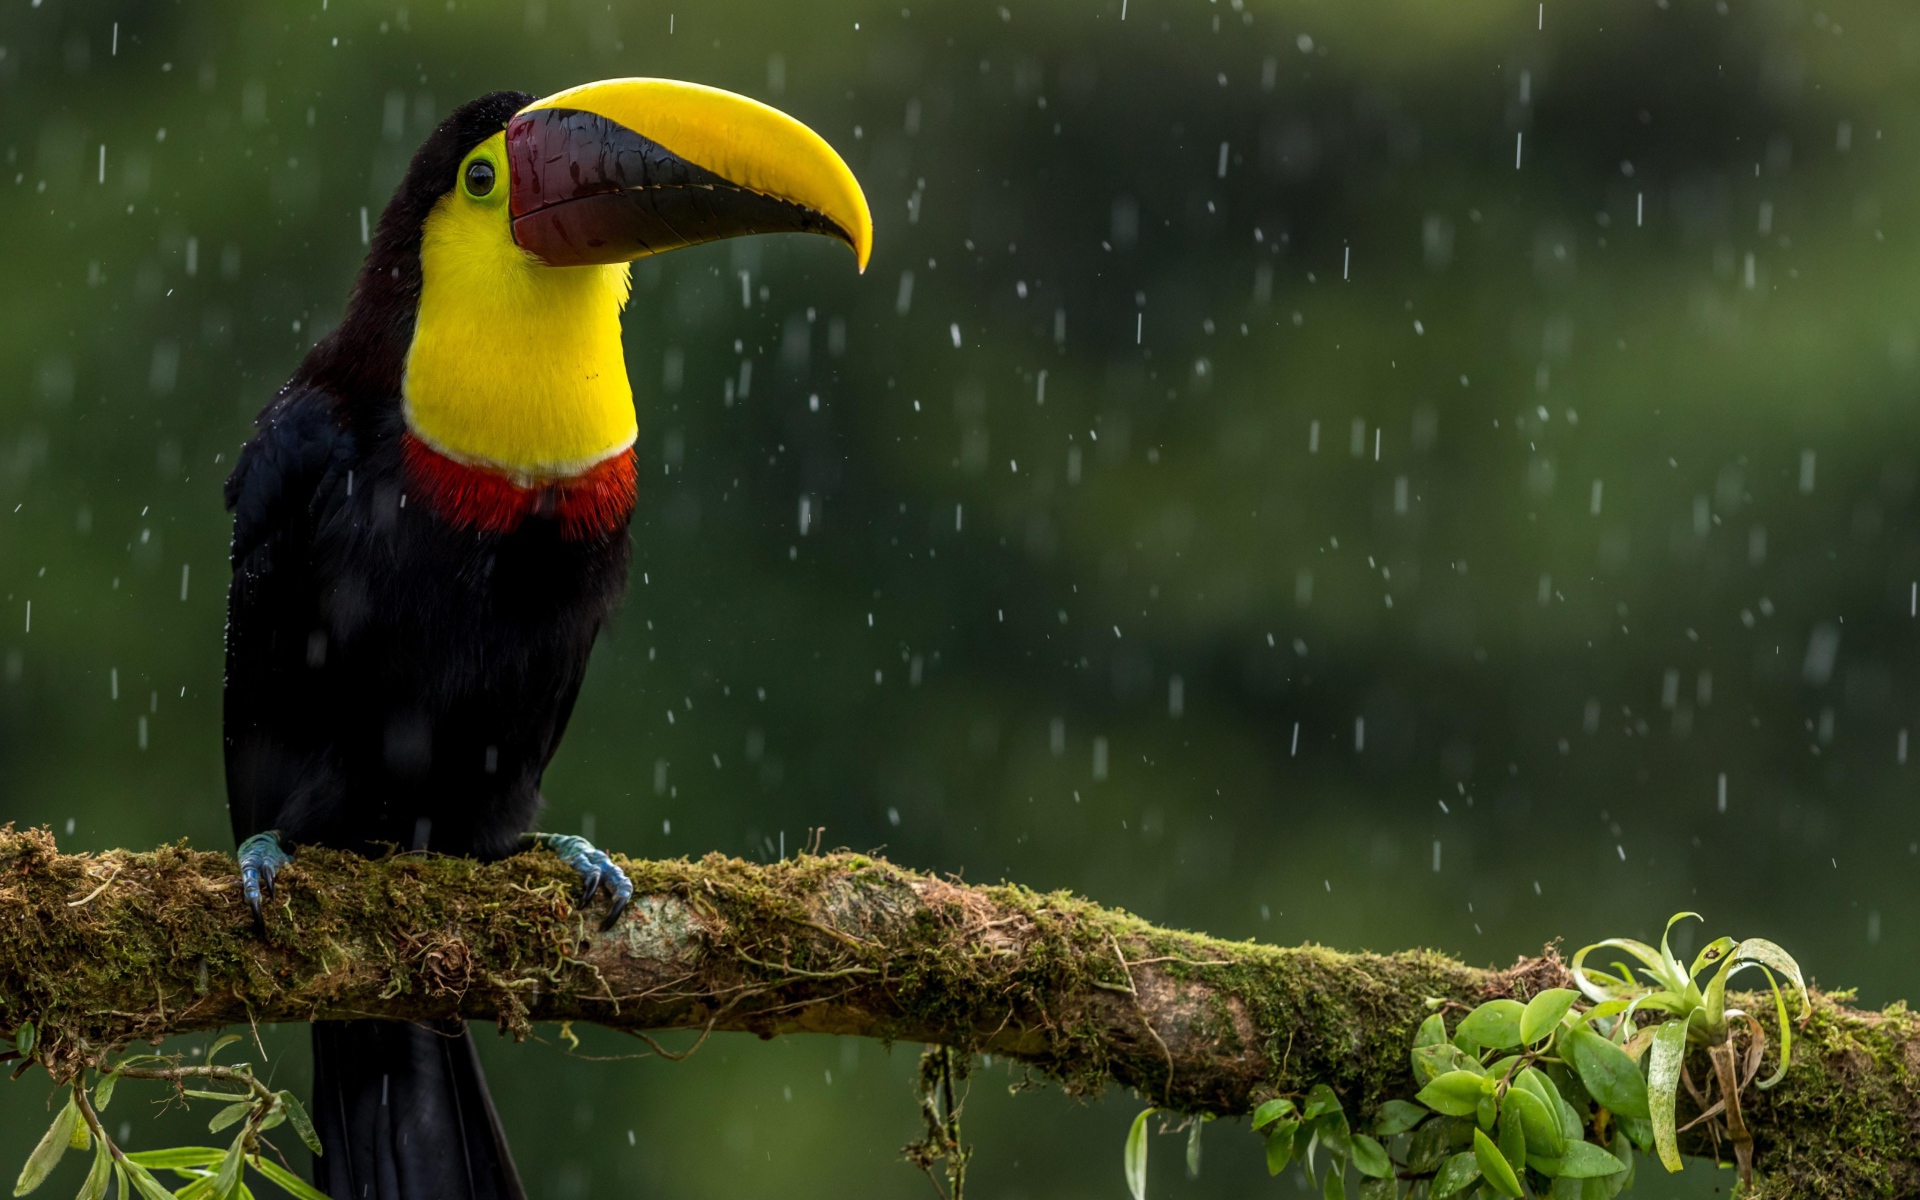 Toucan bird sitting on a branch in the rain